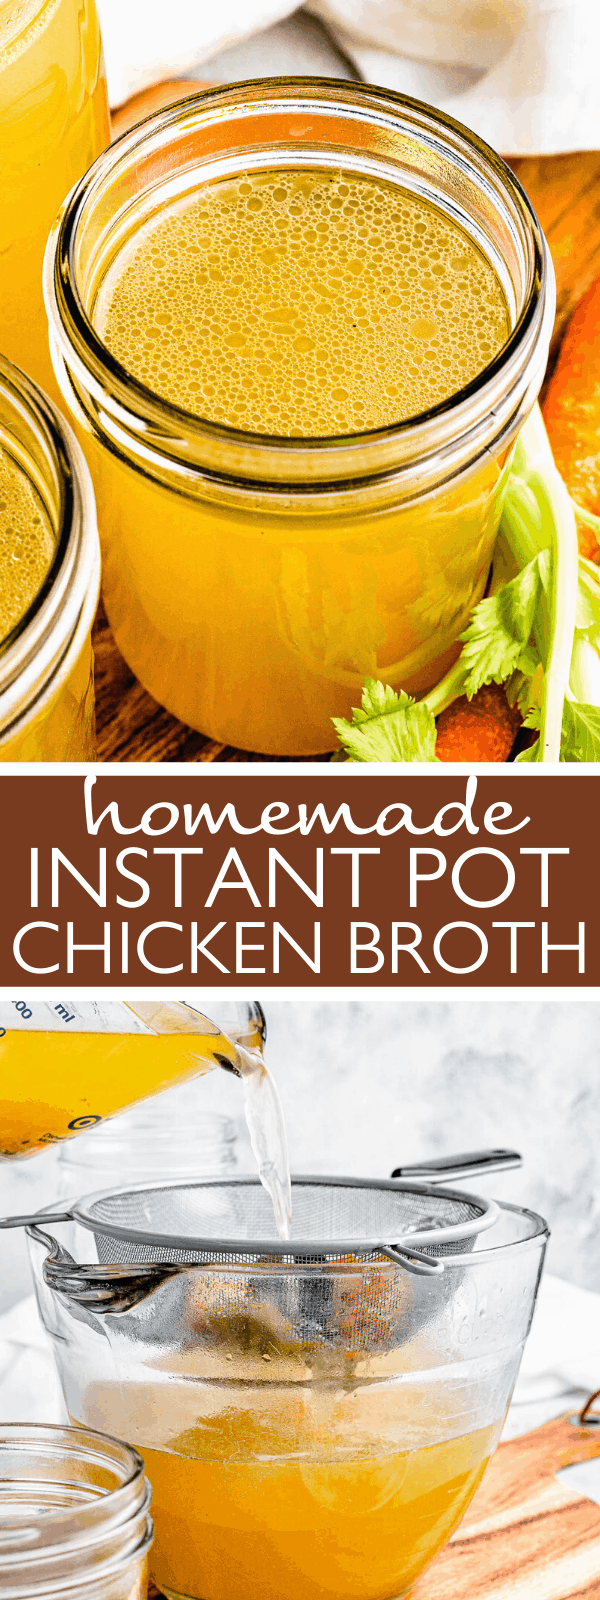 Instant Pot Chicken Broth Recipe | Easy Weeknight Recipes